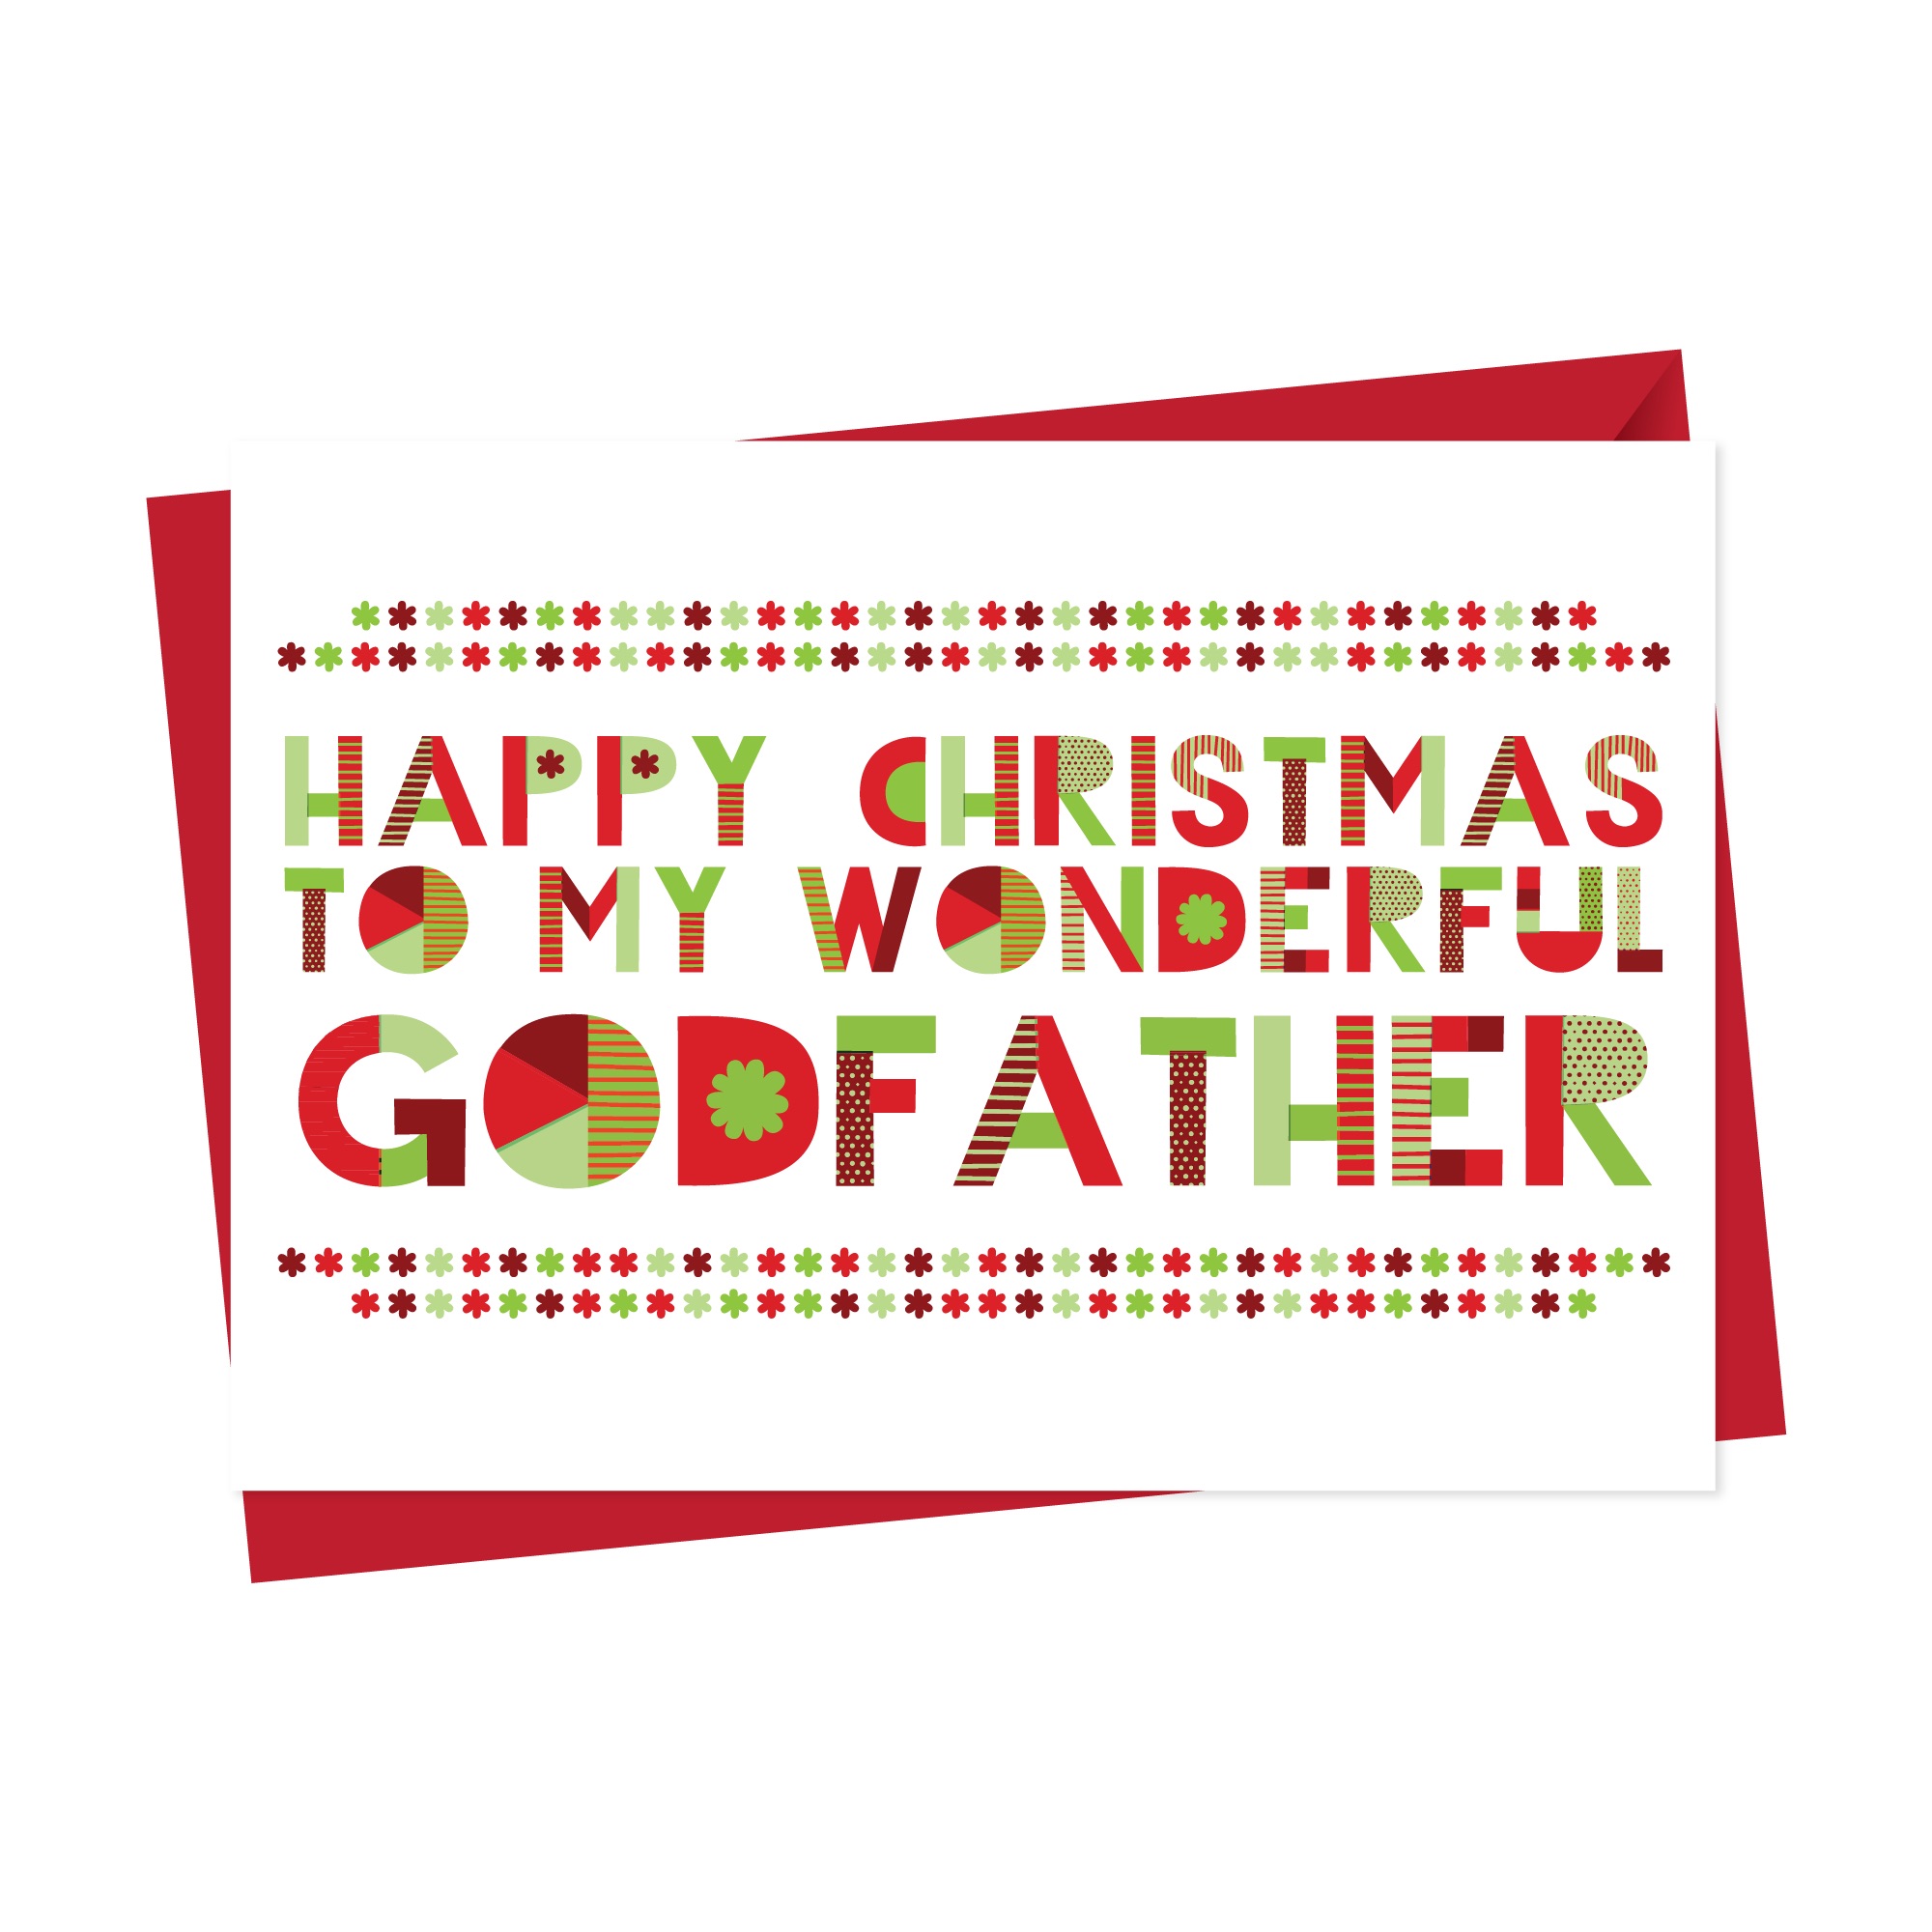 Wonderful Godfather Christmas Card